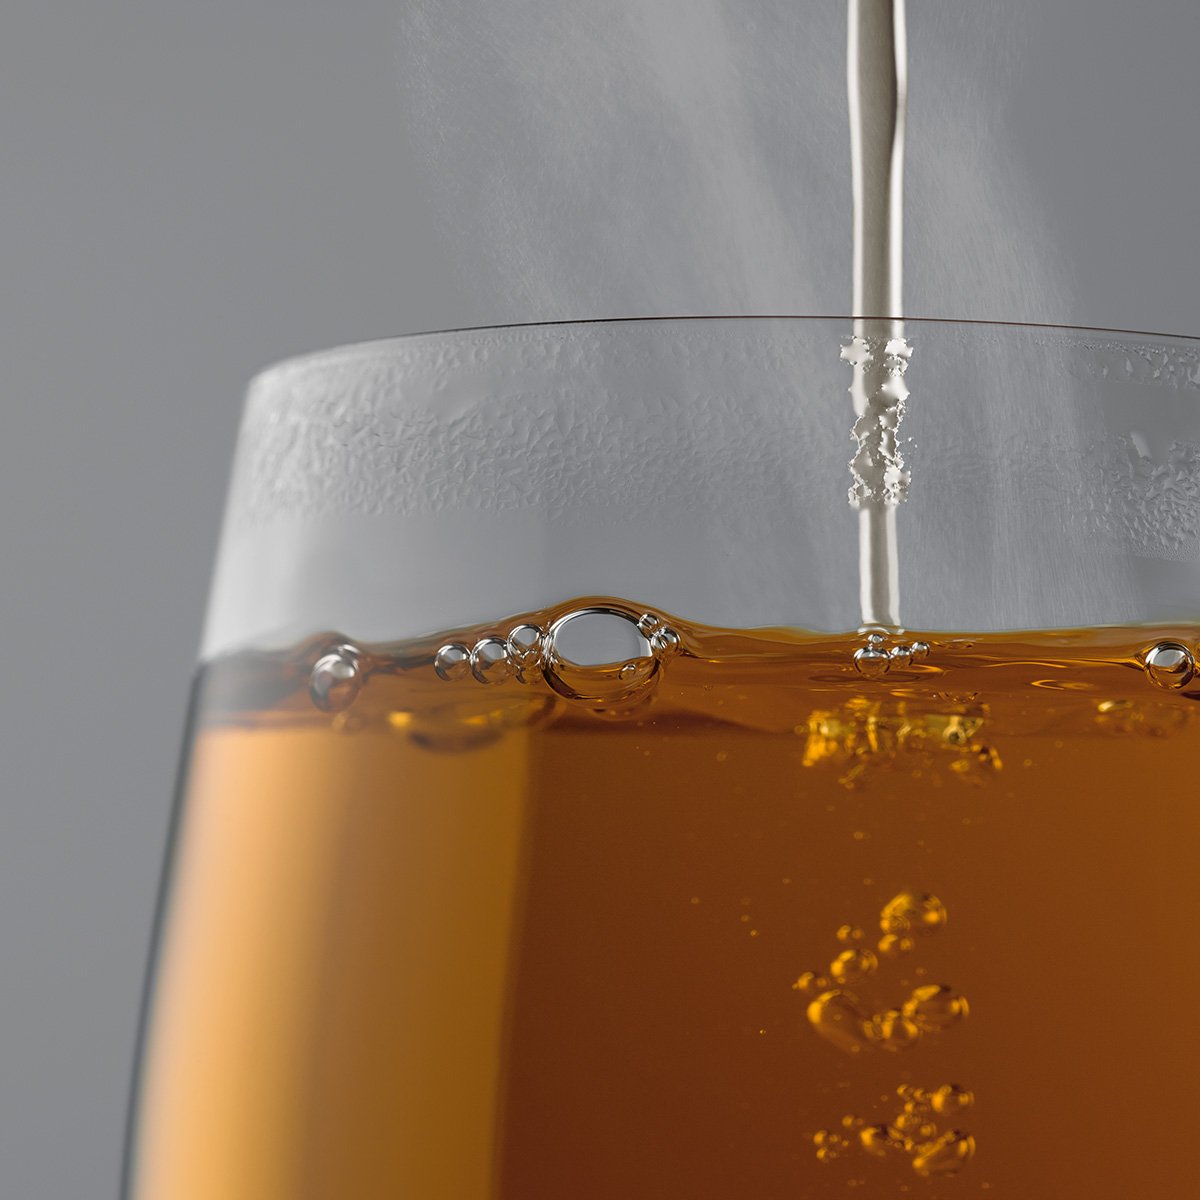 Honey Rooibos  | Avoury. The Tea.